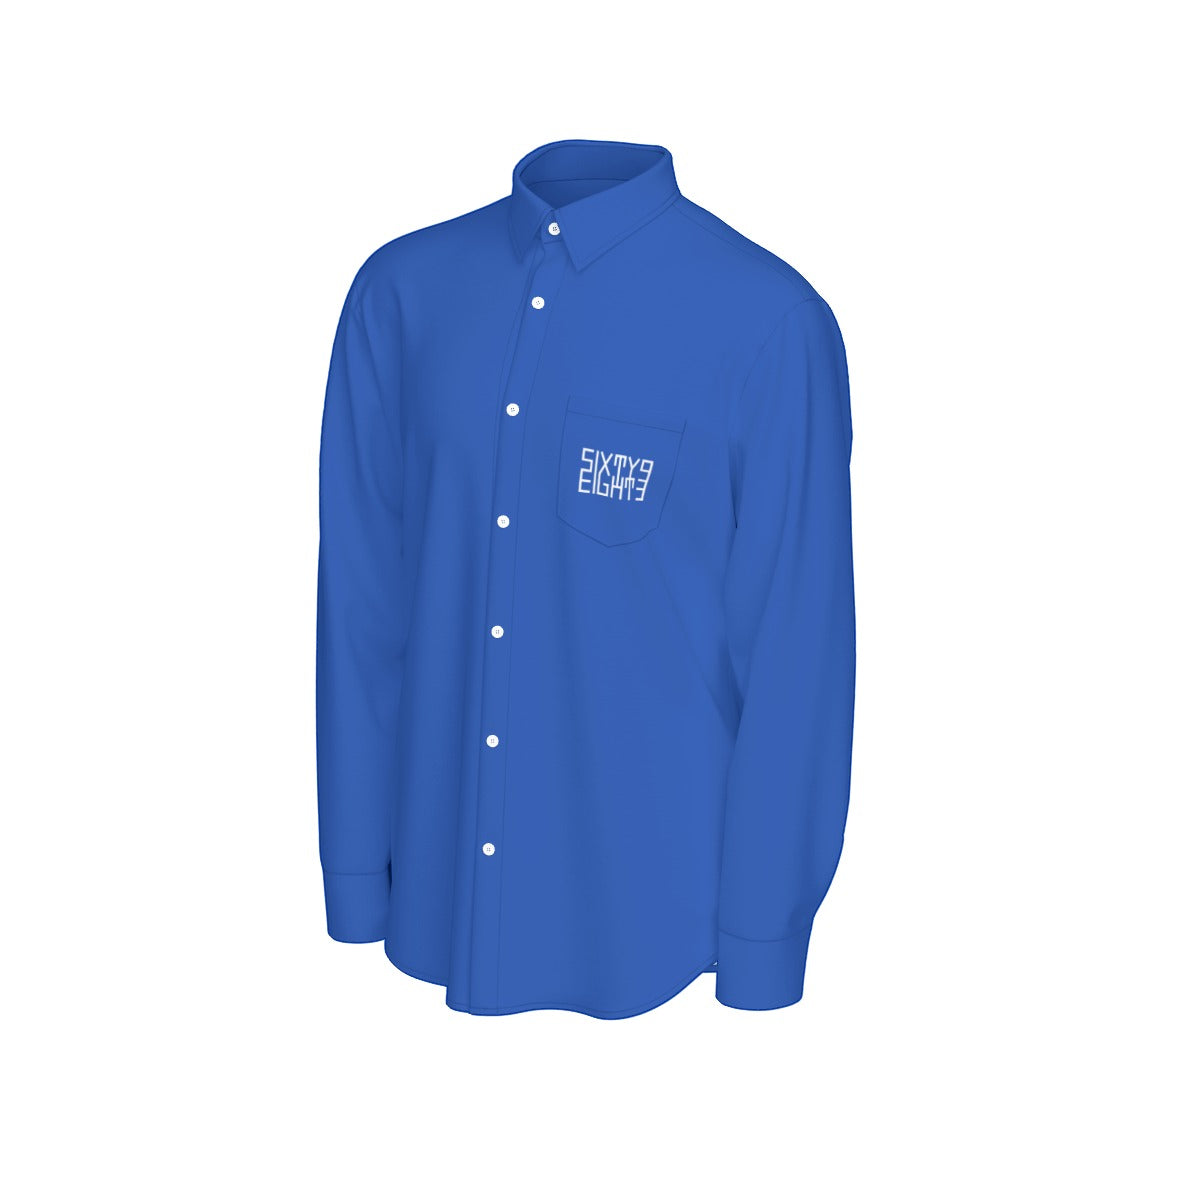 Sixty Eight 93 Logo White Blue Men's Cotton Long Sleeve Shirt